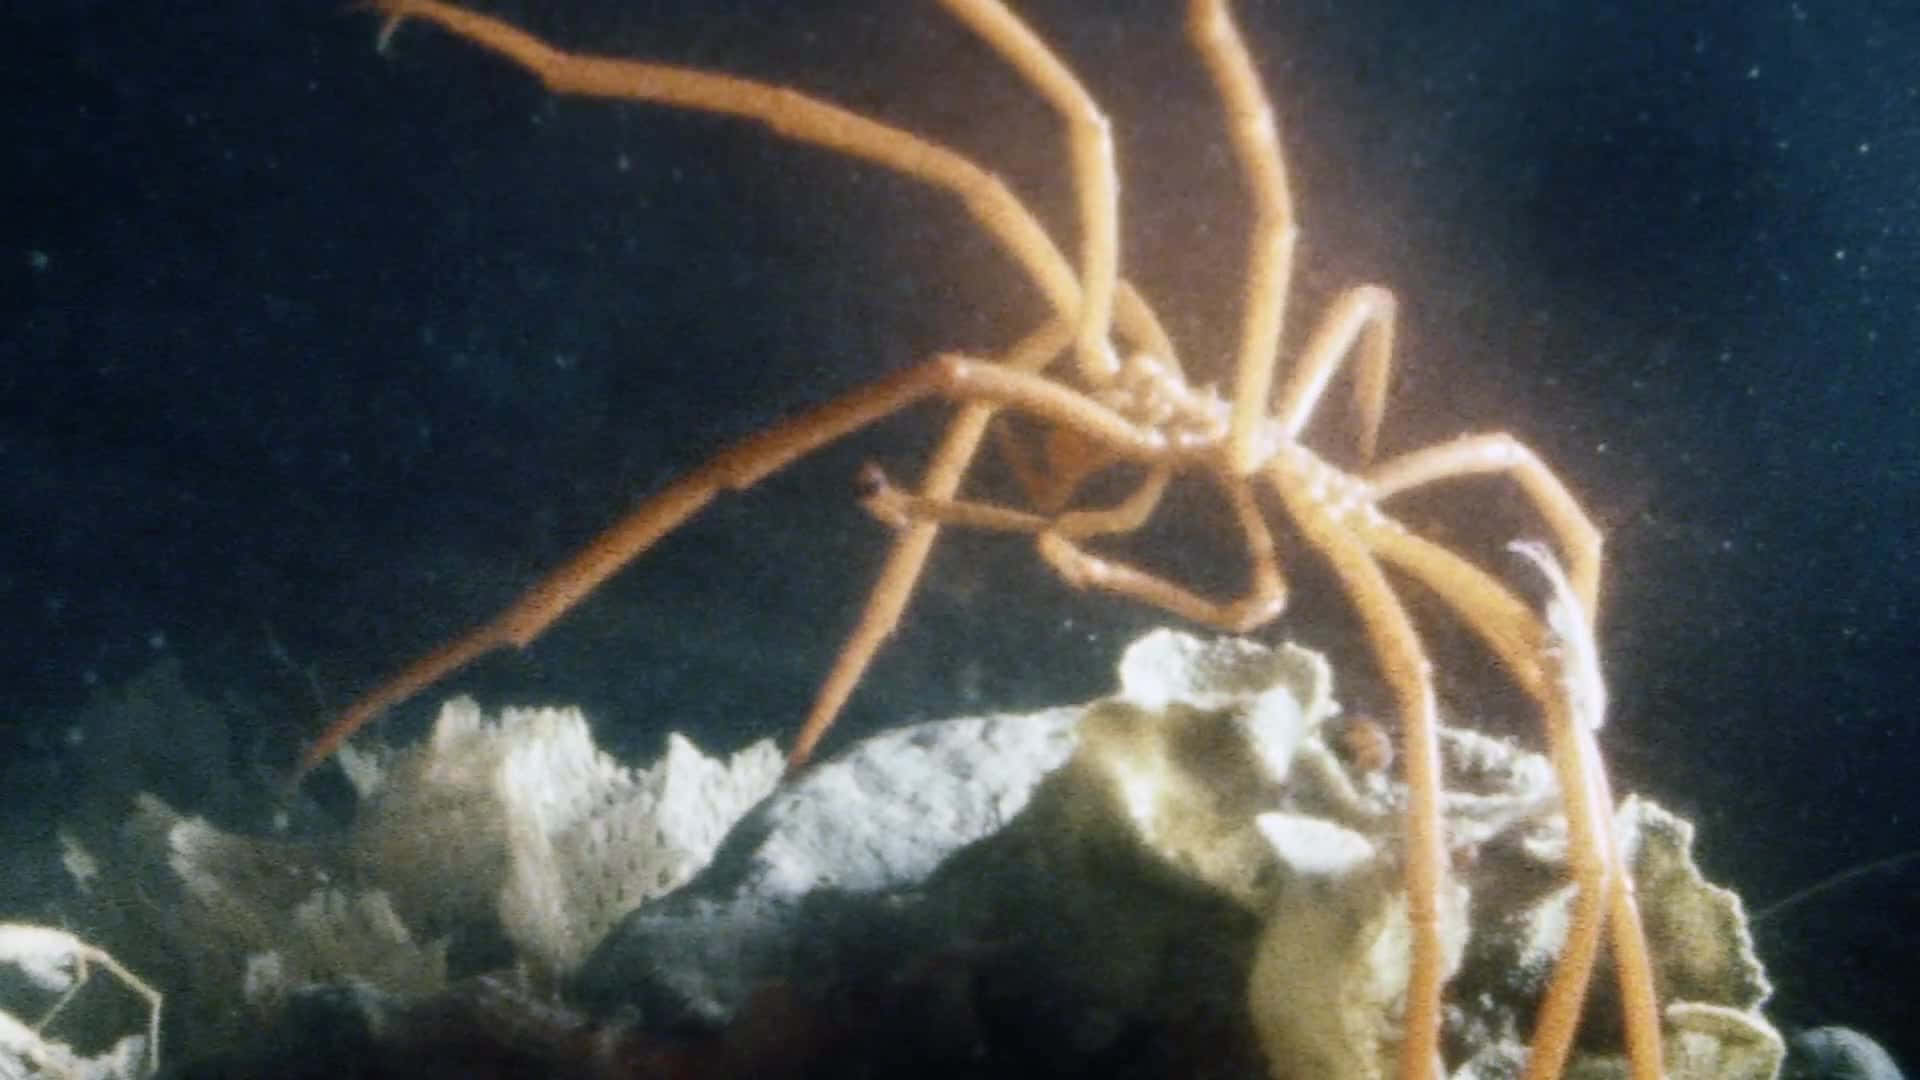 Underwater Marvel - The Spectacular Sea Spider Wallpaper